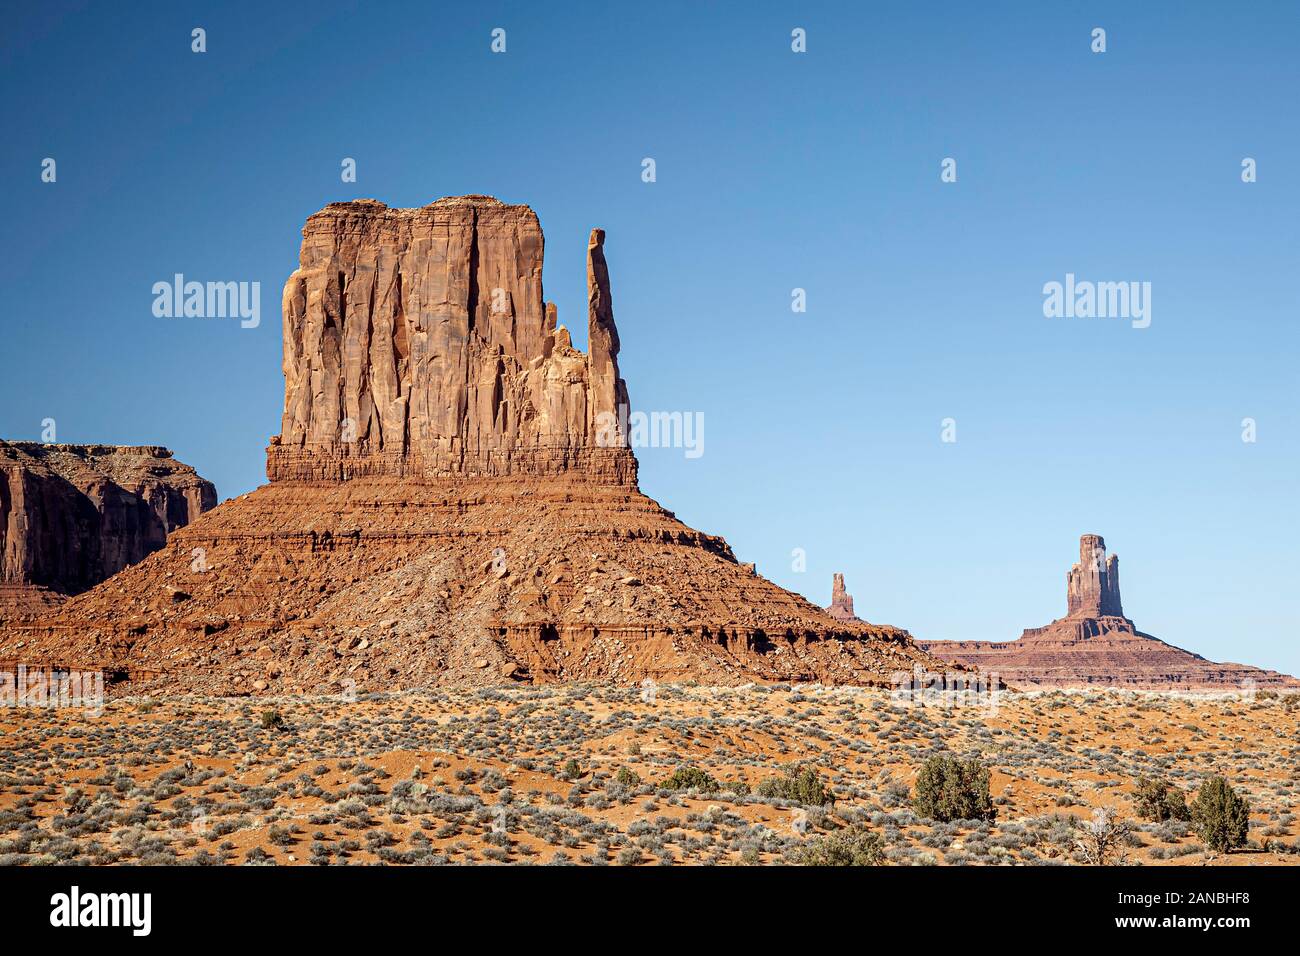 West Mitten, Monument Valley, Arizona et l'Utah, USA frontaliers Banque D'Images